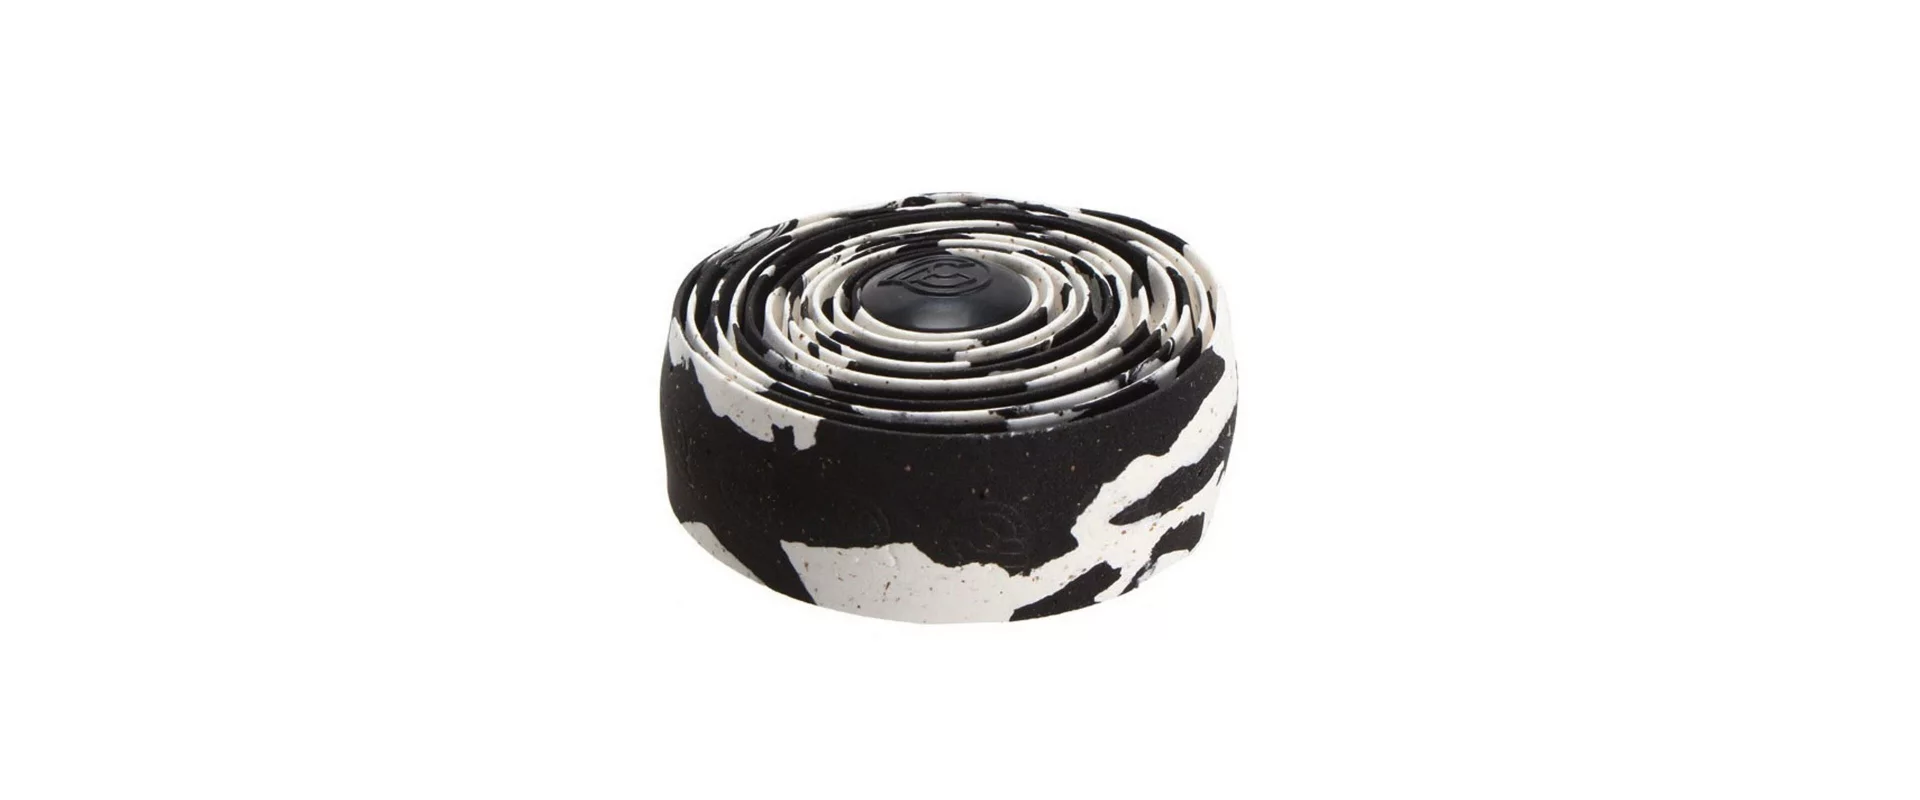 Cinelli Tape Cork Marco Splash White-Black / Обмотка руля пробковая фото 1